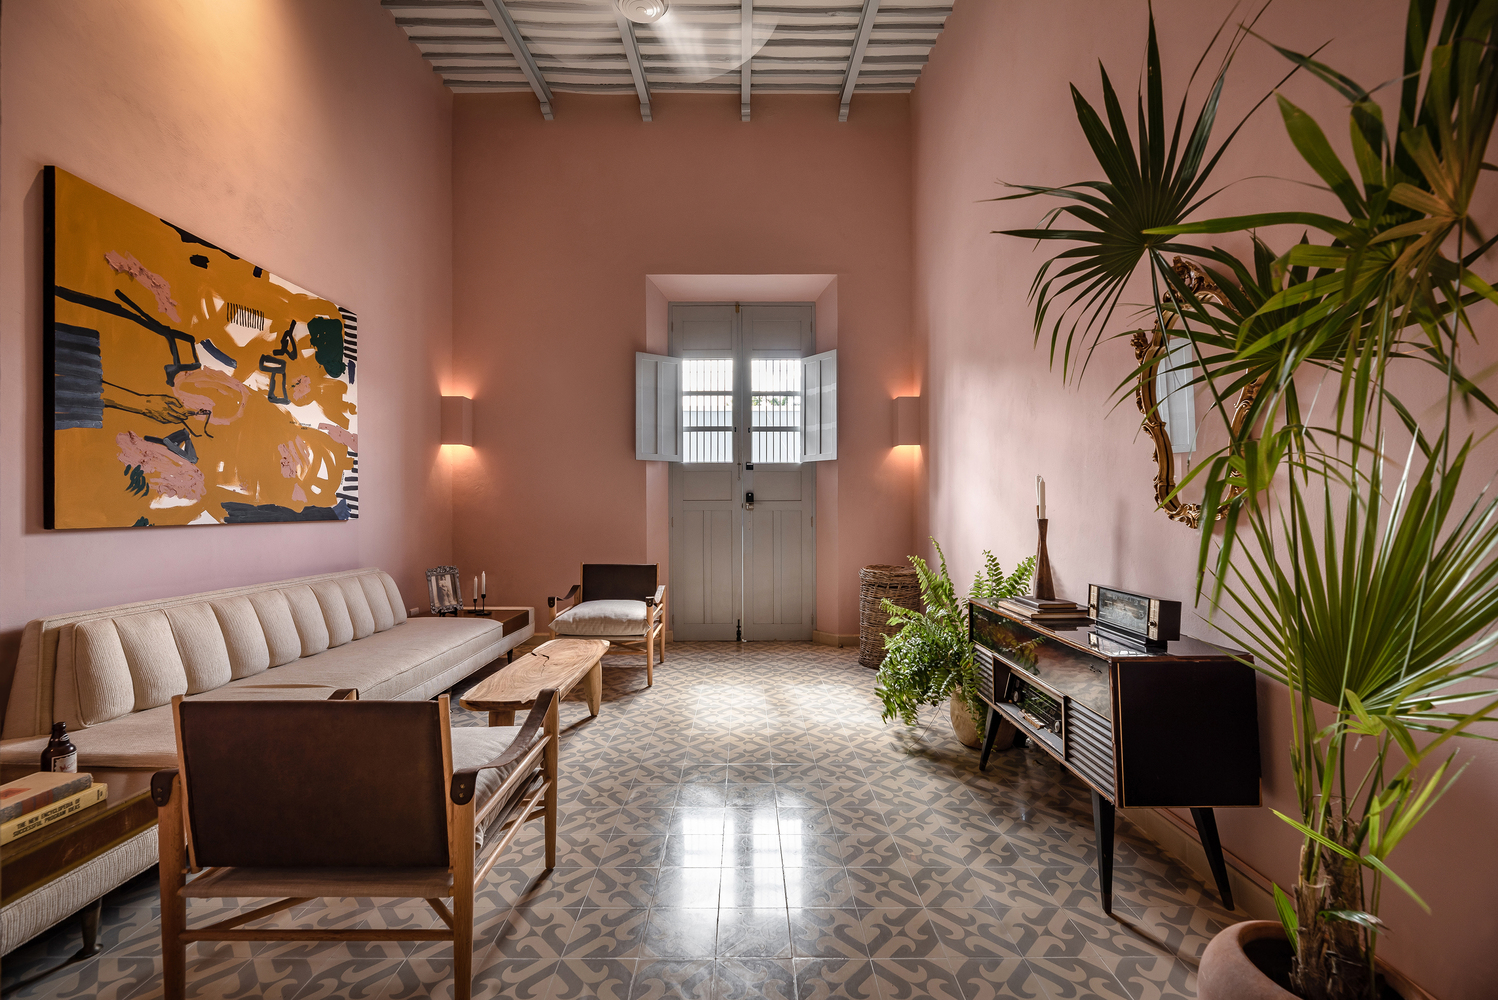 Use of Pastel Tiles in the Interior Design of Casa Lorena